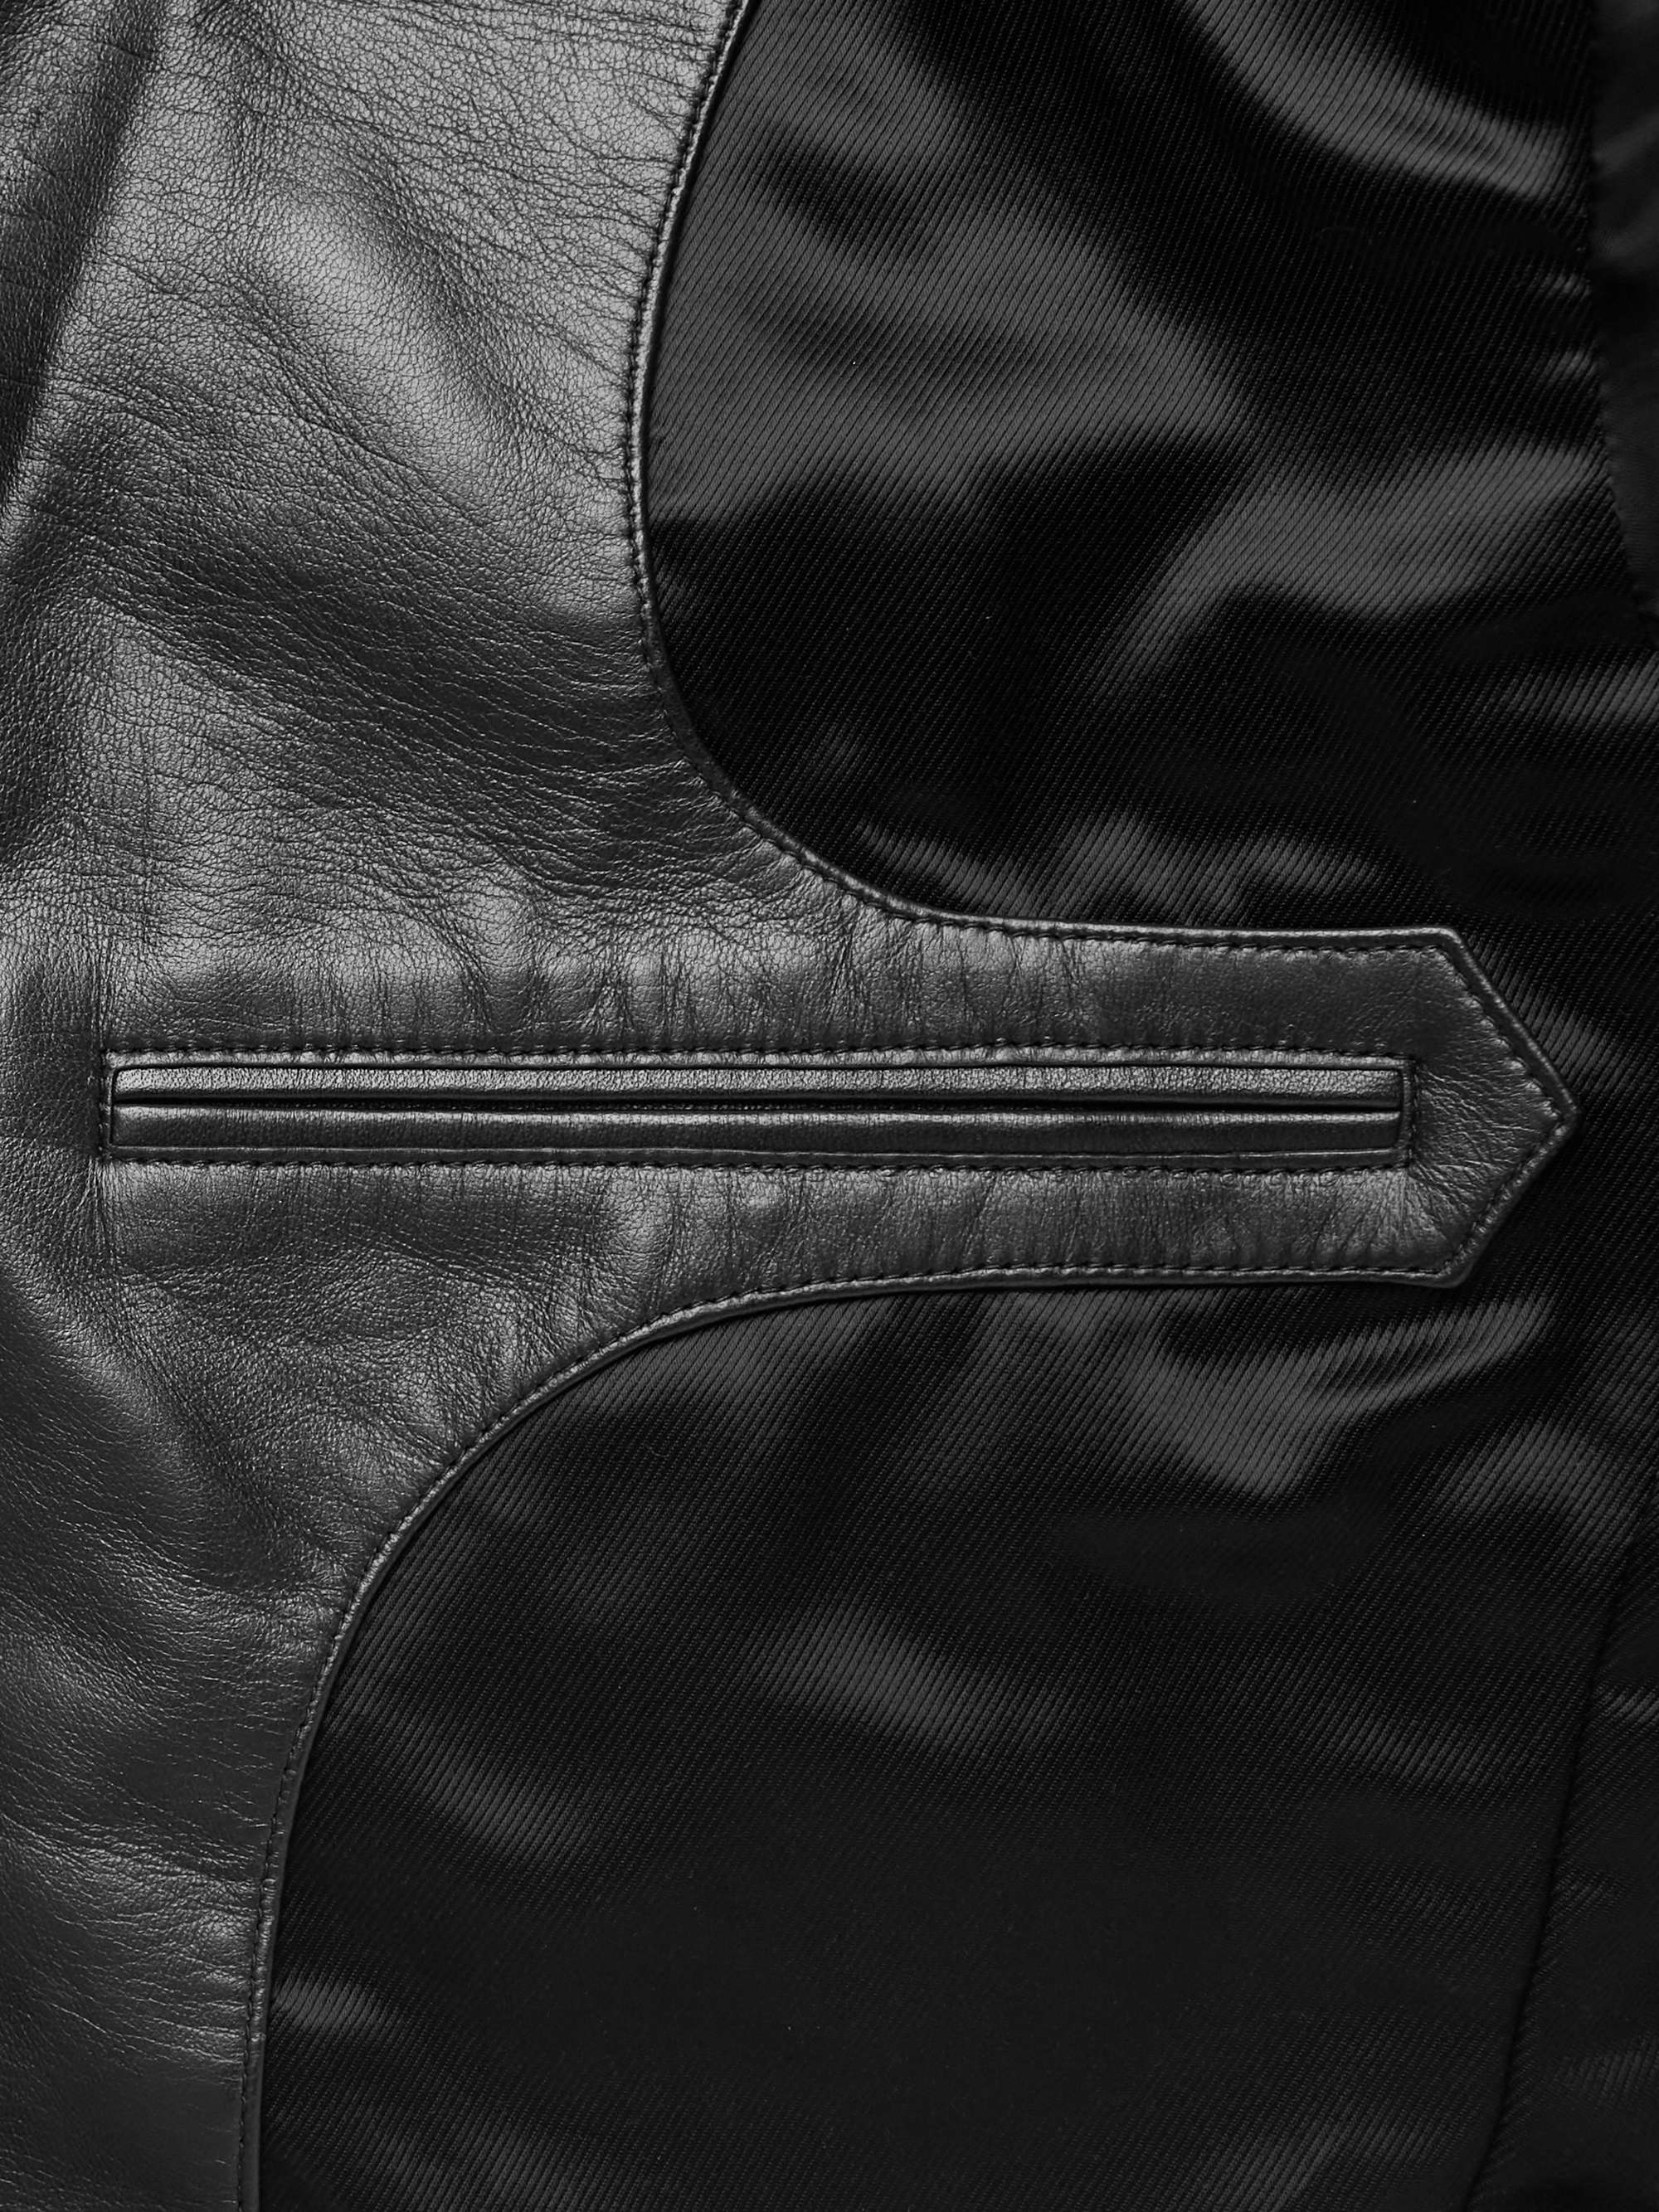 TOM FORD Leather Blazer